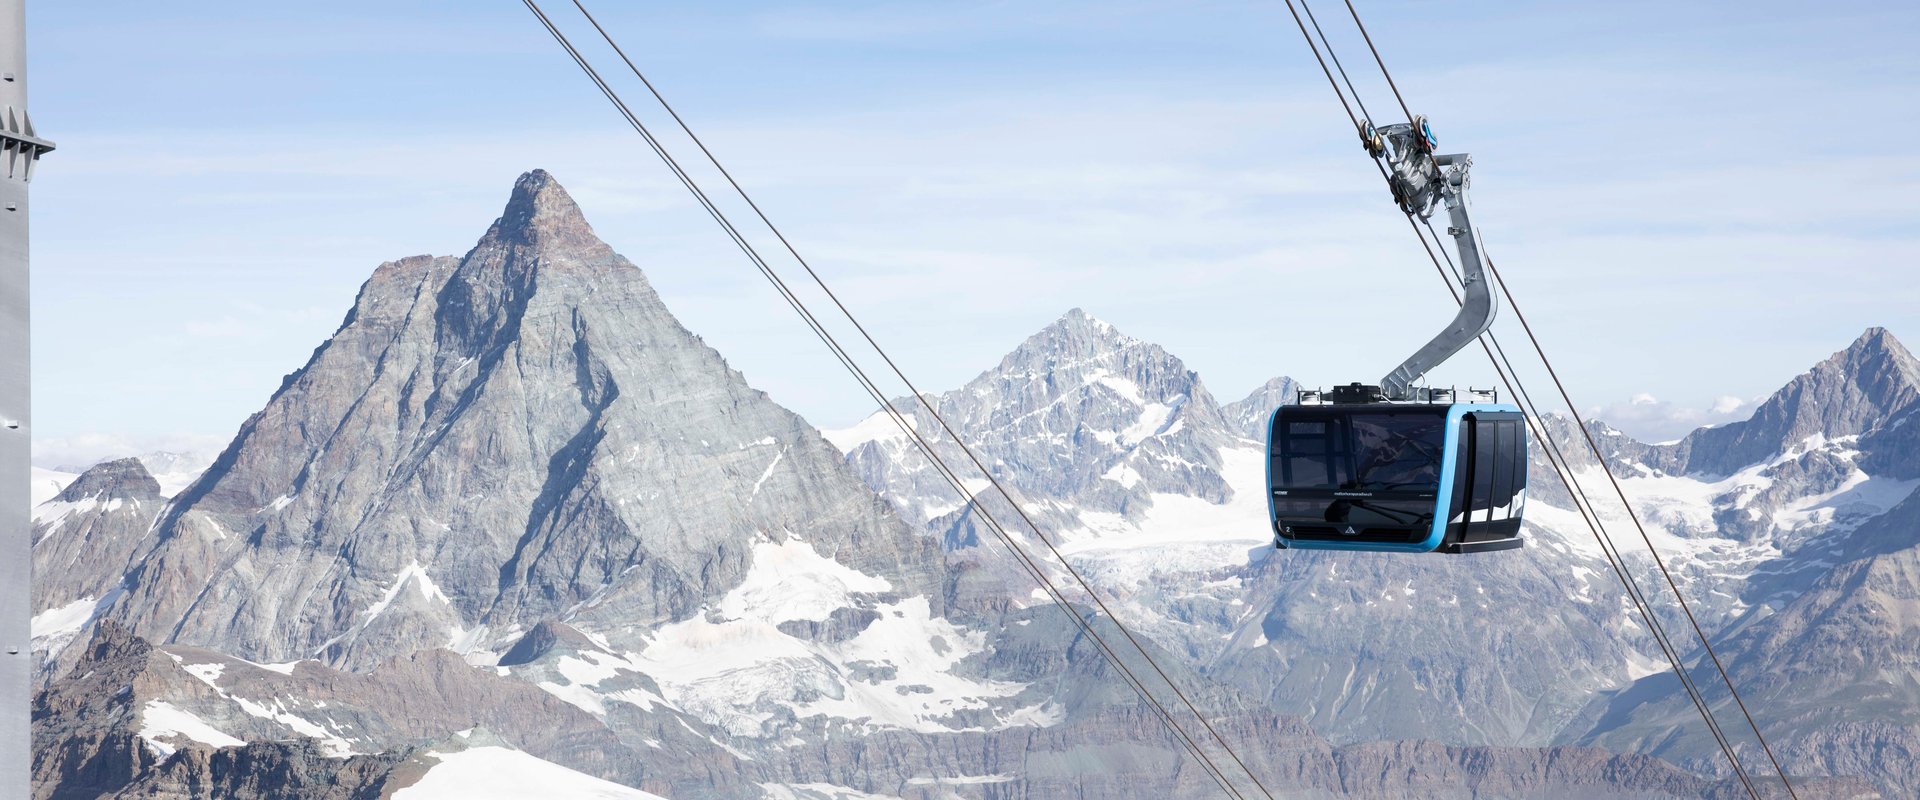 gondola in front of the mountains of Zermatt